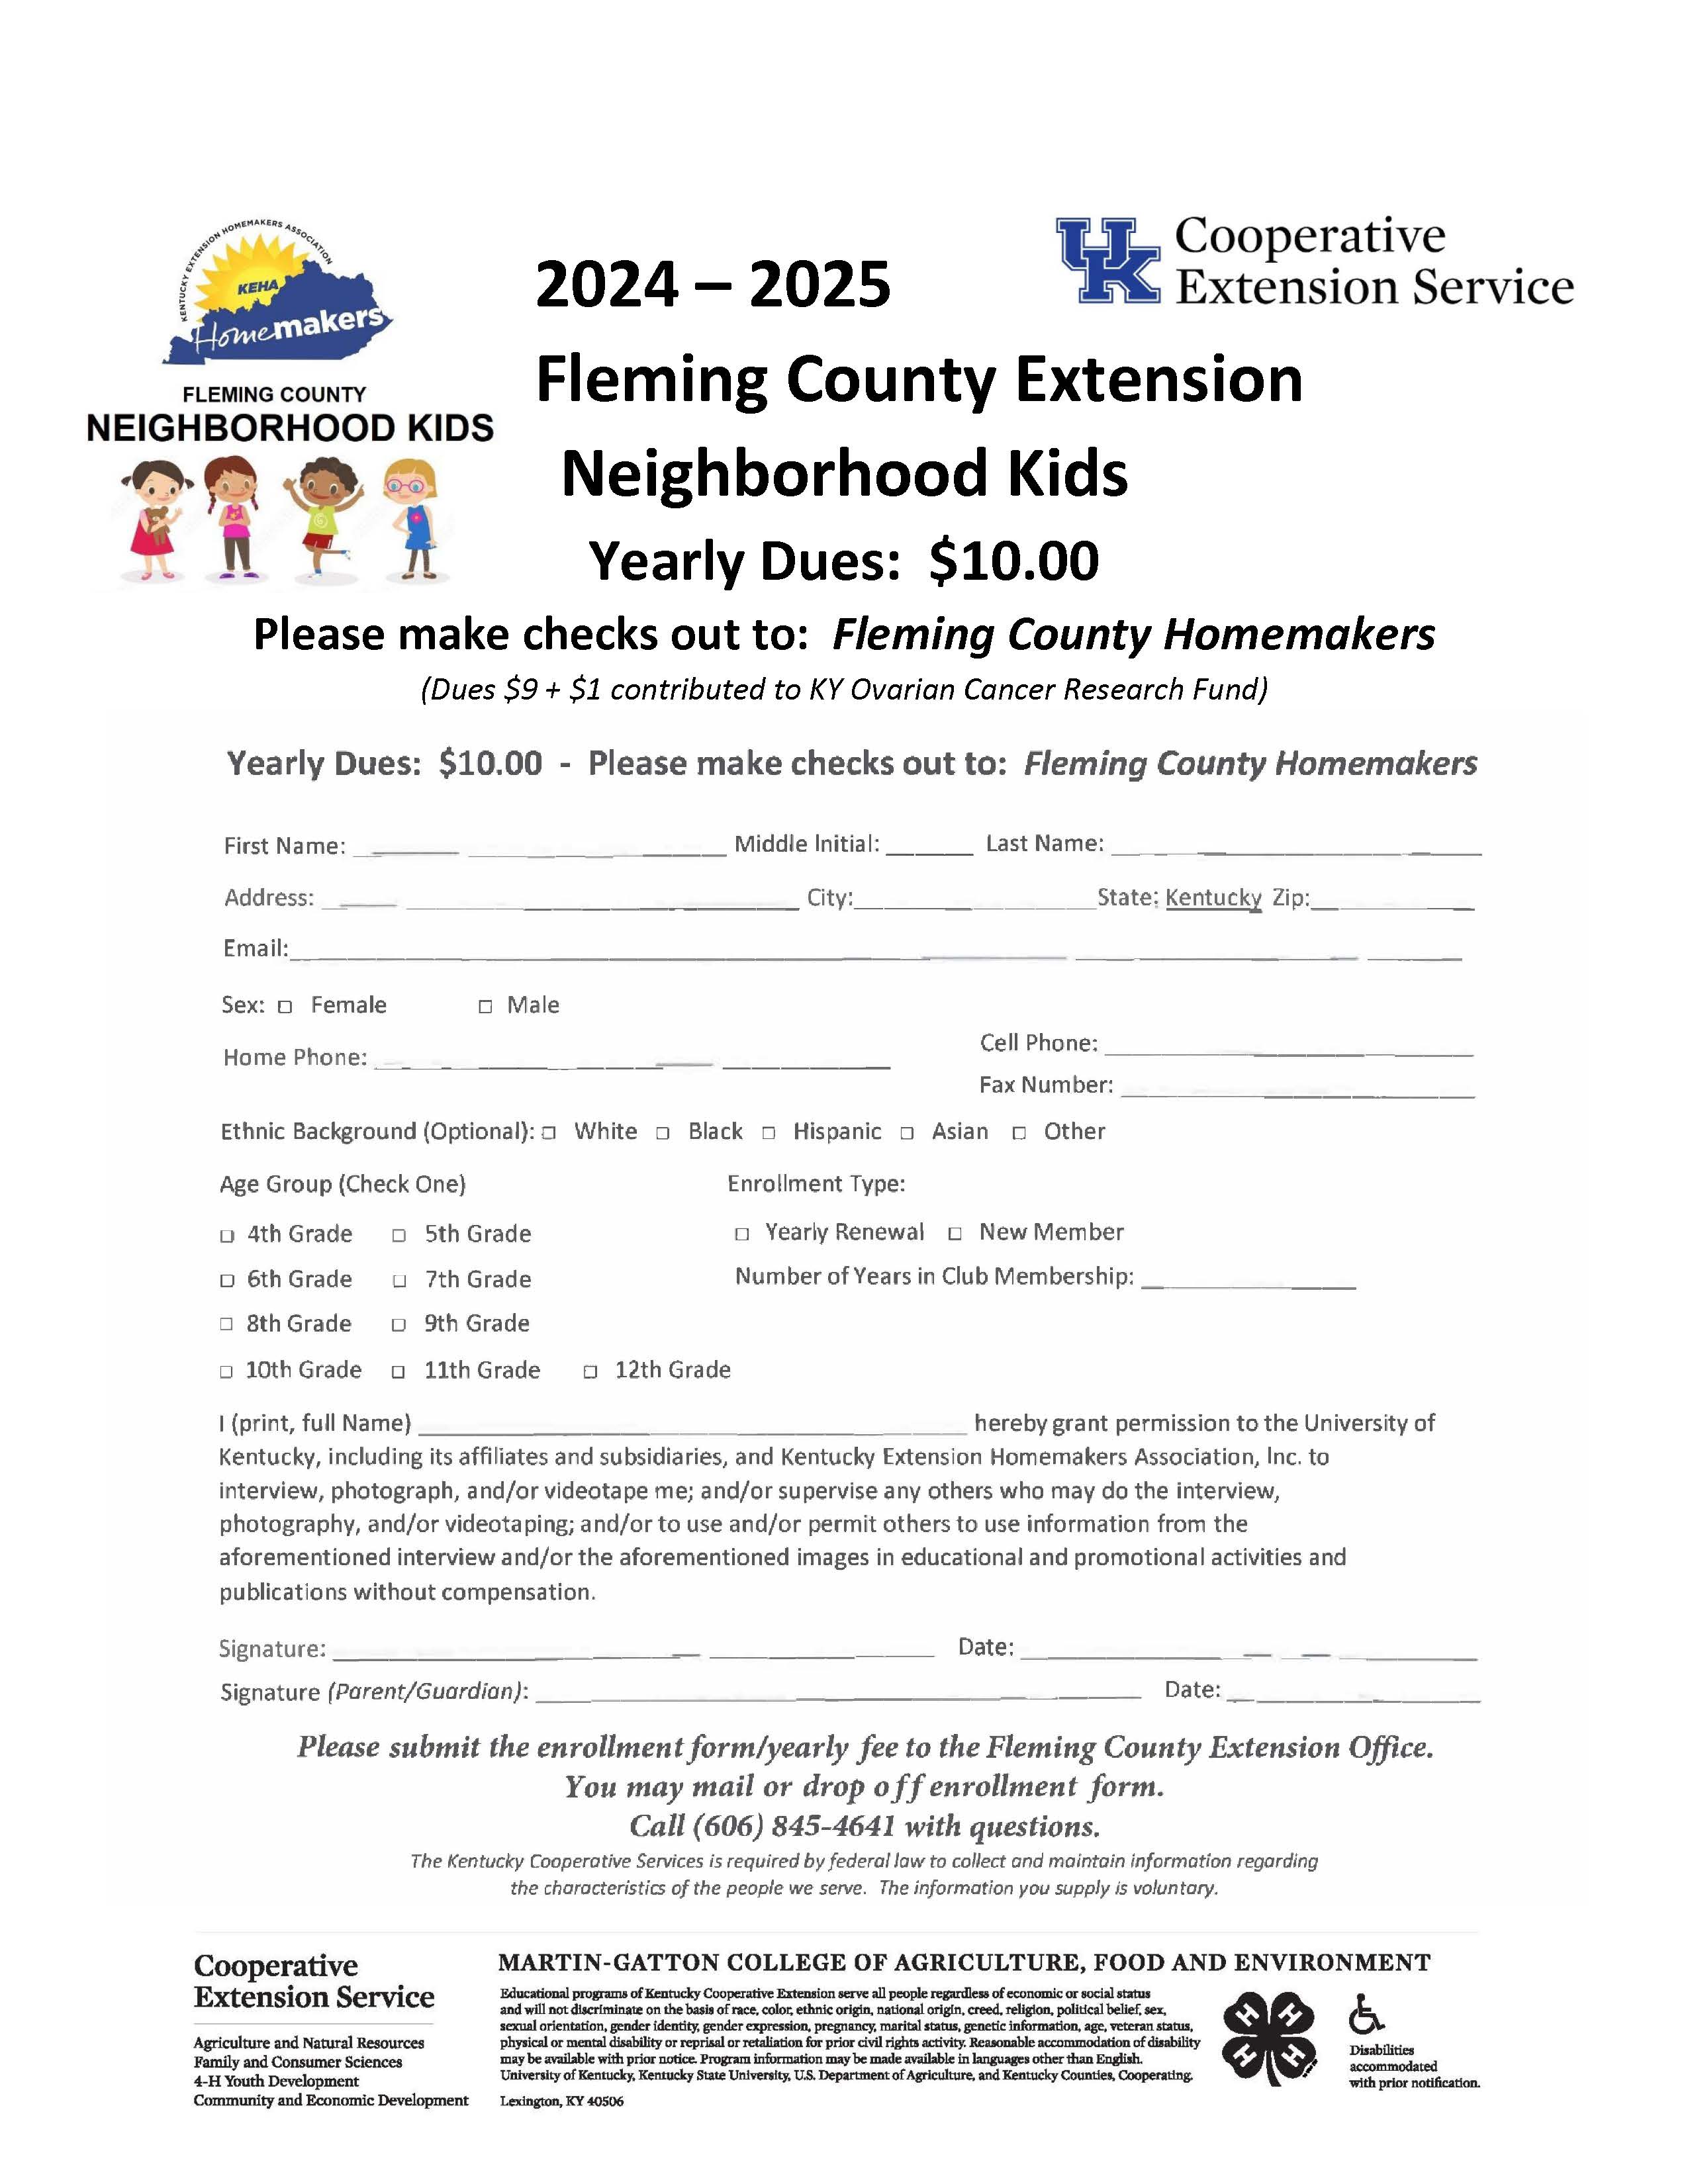 2024-2025 Neighborhood Kids Enrollment Form